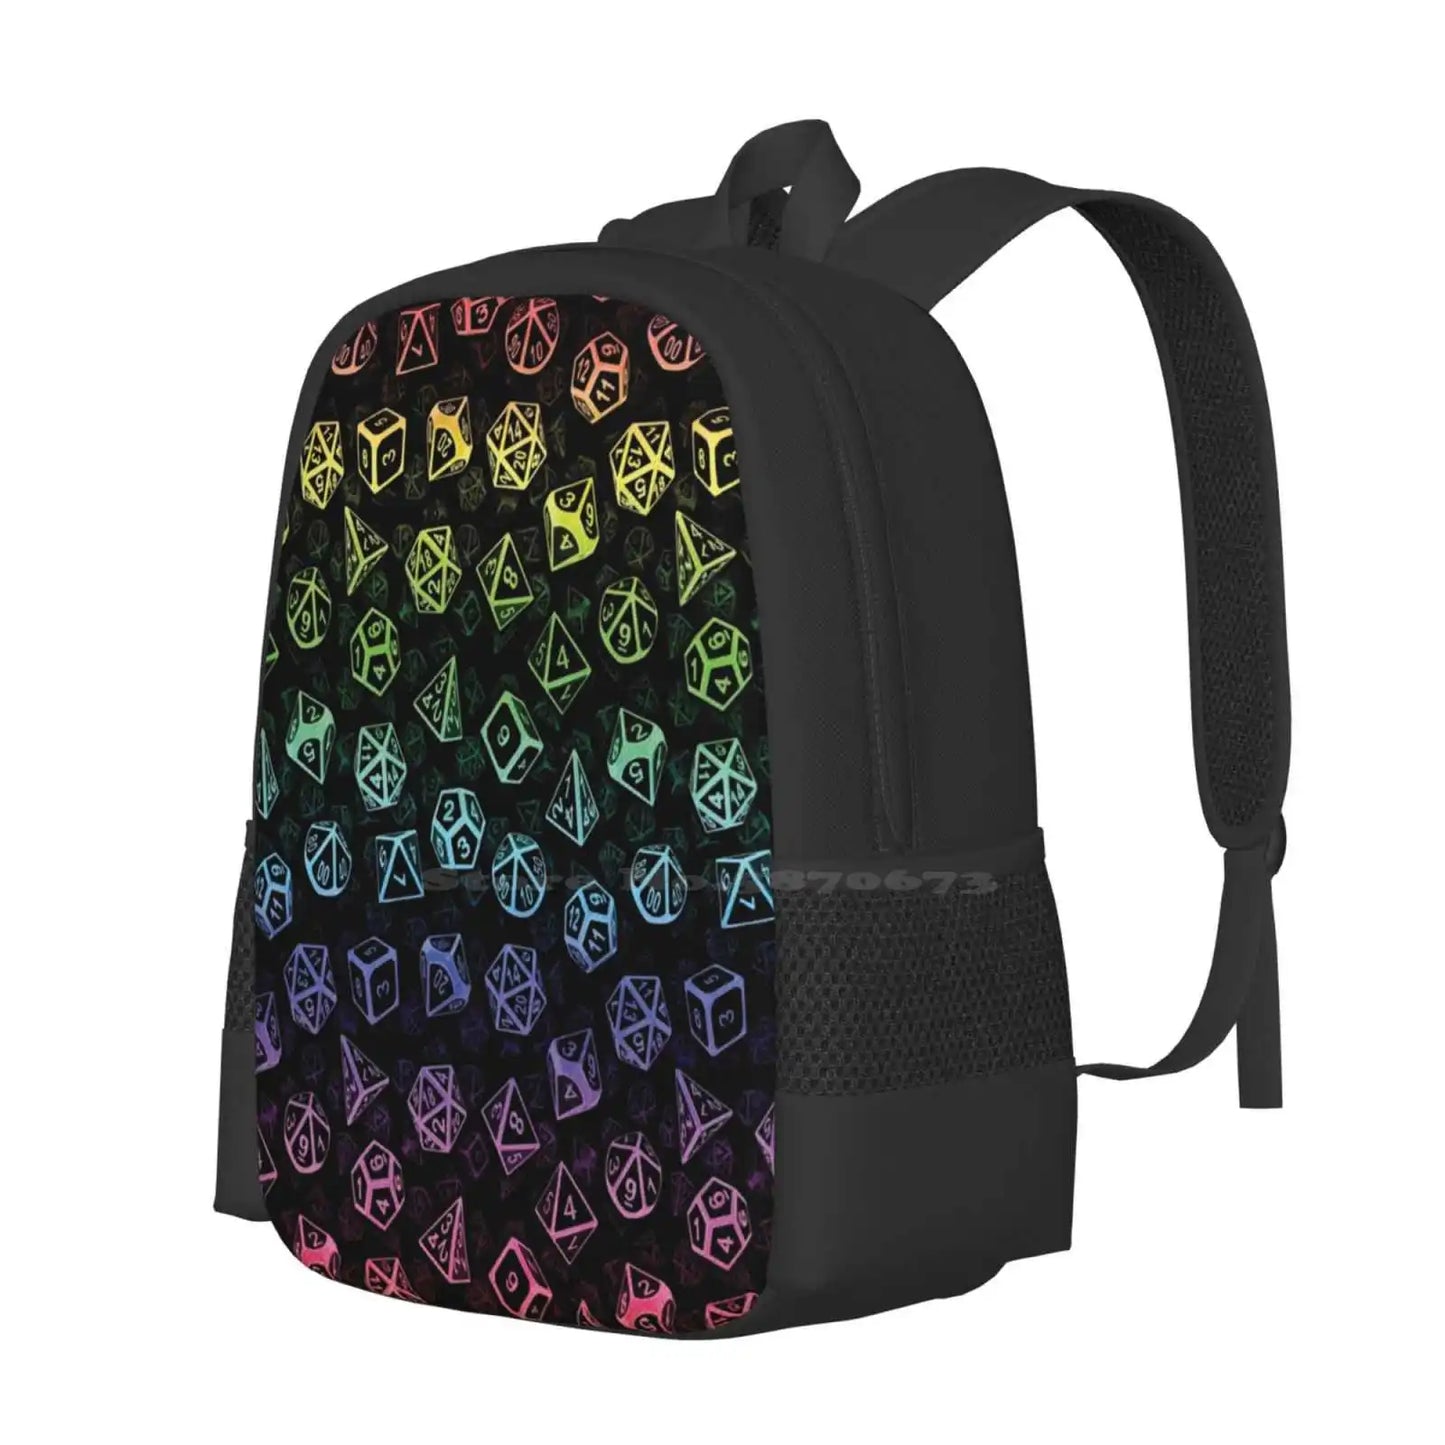 D20 Dice Set Pattern ( Rainbow ) Pattern Design Bagpack School Bags D20 Dnd And Dragons Pathfiner Starfinder Dice Set Nerd Geek